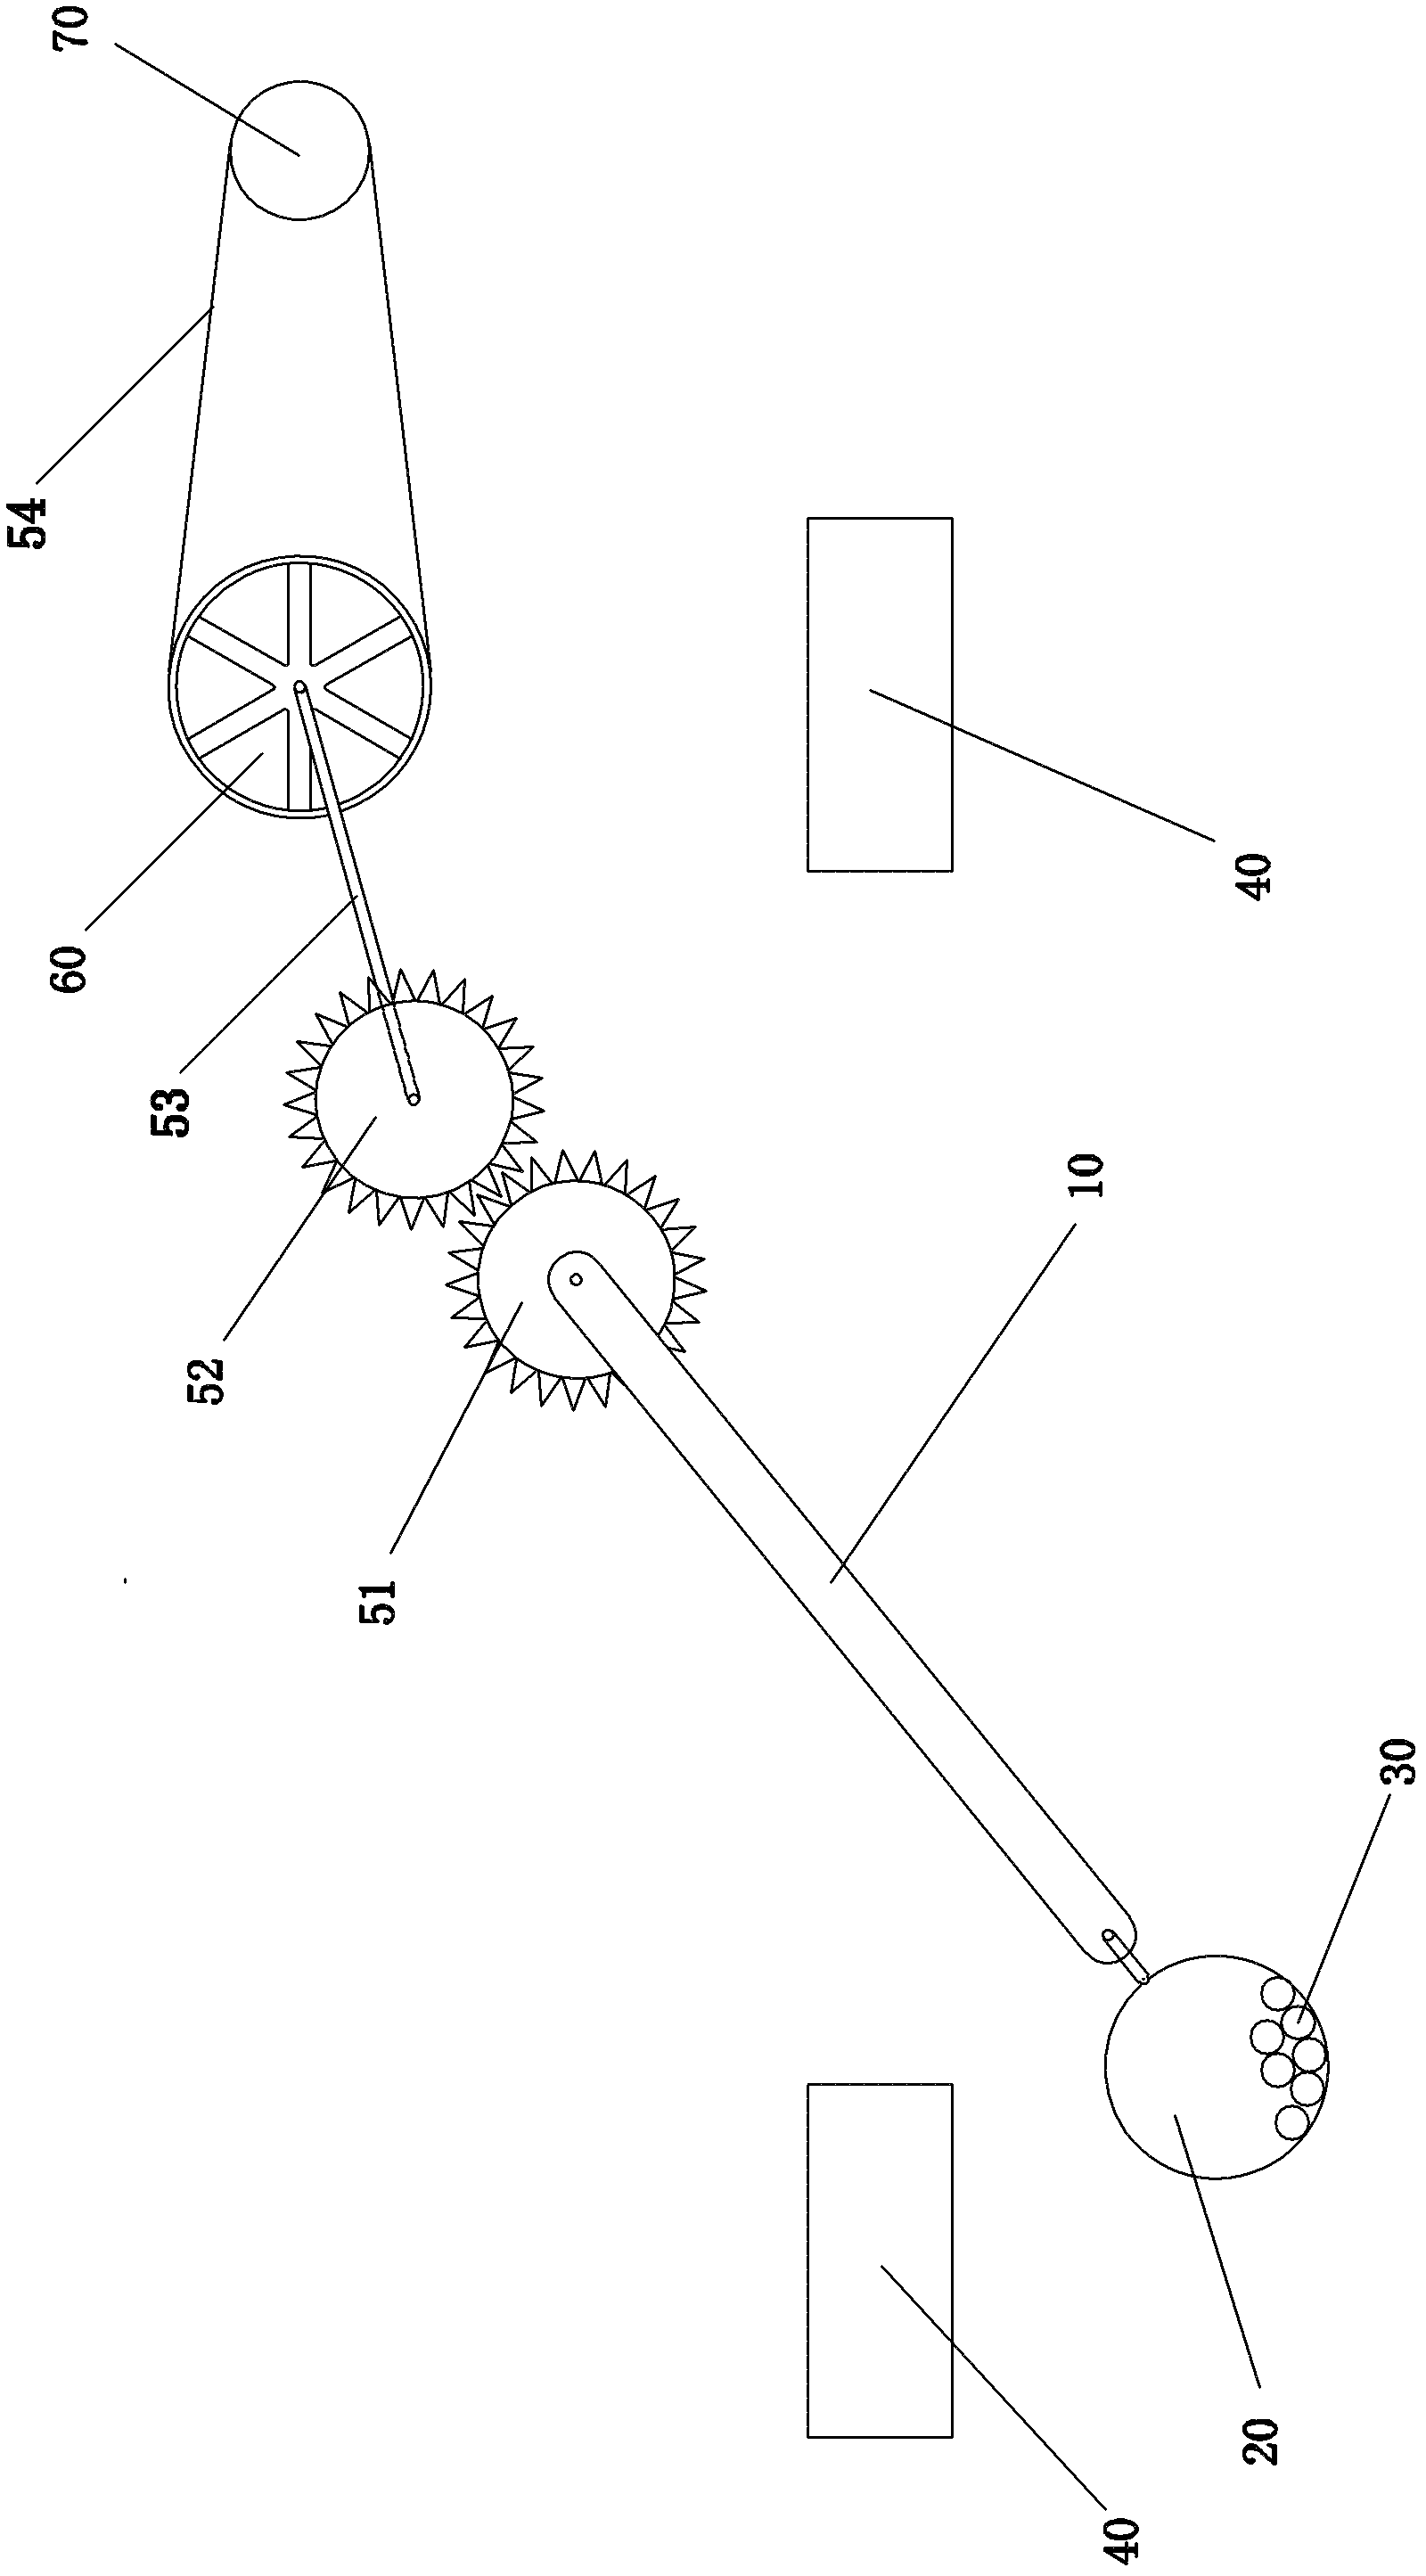 Module for capturing kinetic energy by utilizing single pendulum